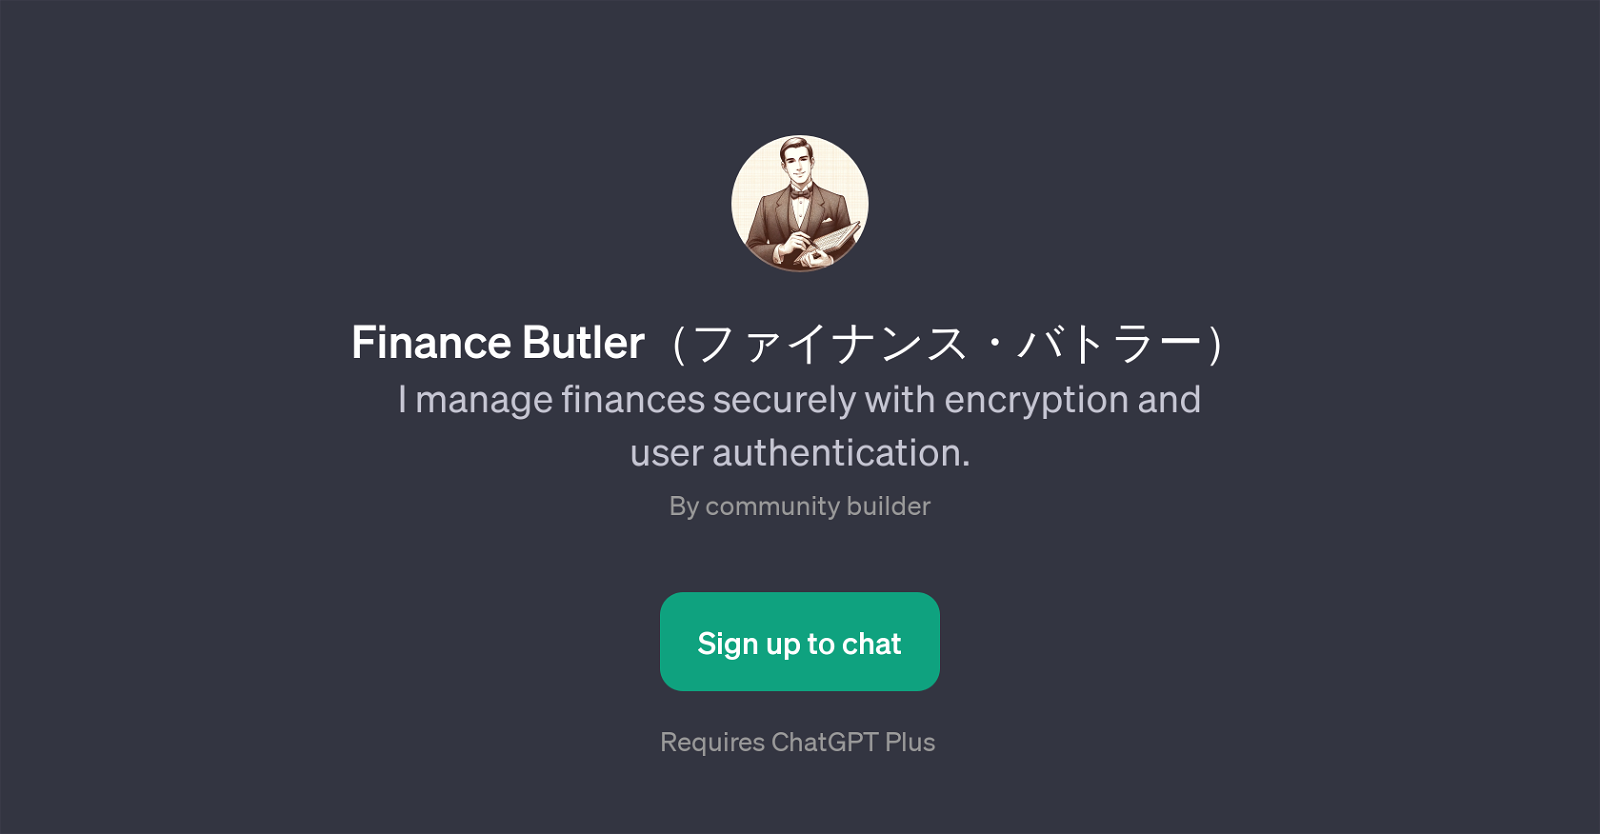 Finance Butler website